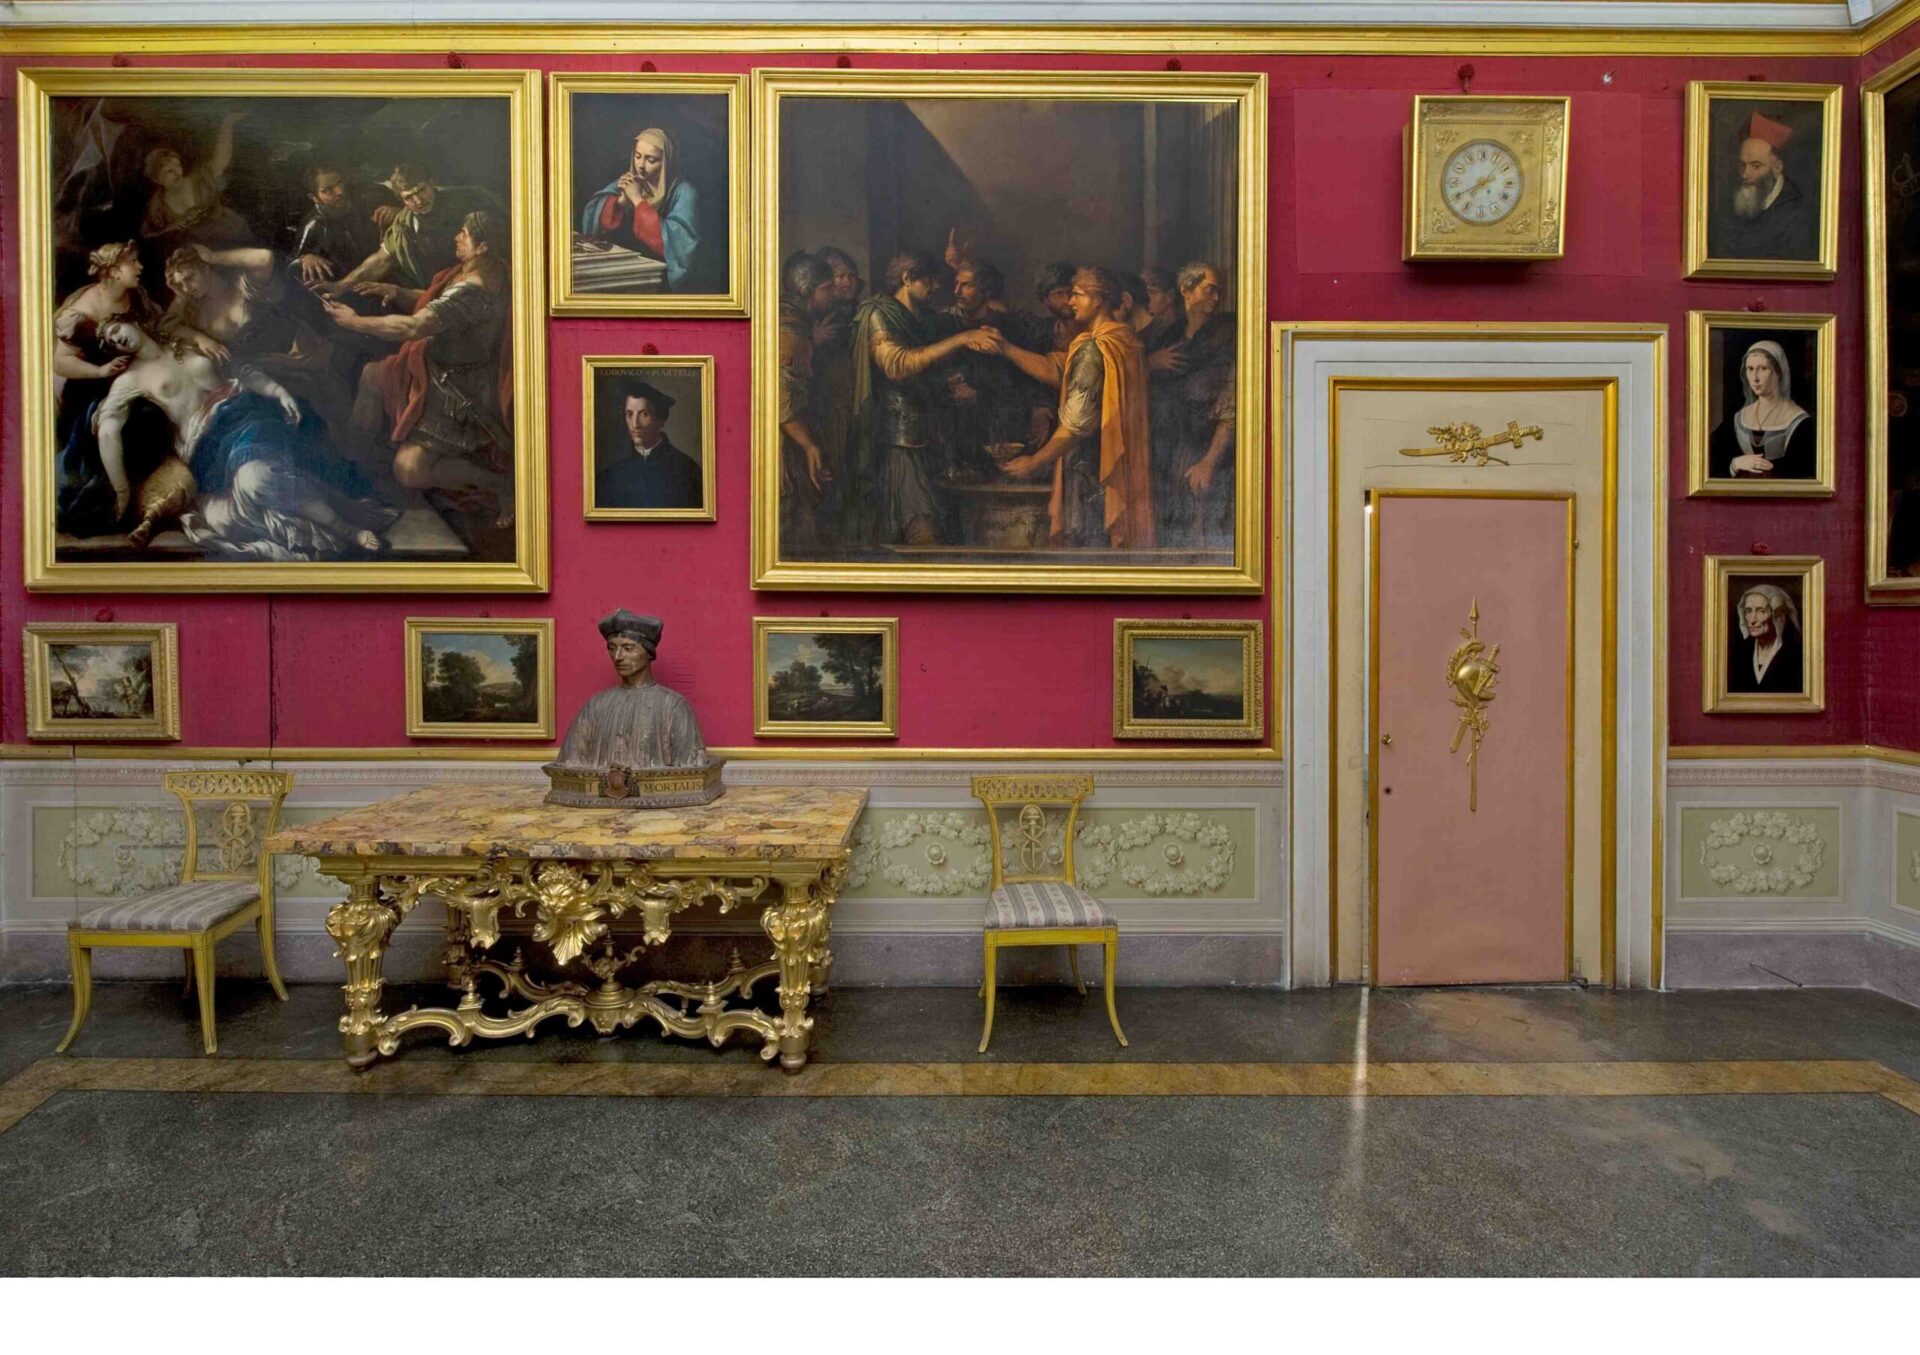 Casa Martelli raddoppia le aperture, a Firenze visite gratuite alla scoperta di 400 anni di storia